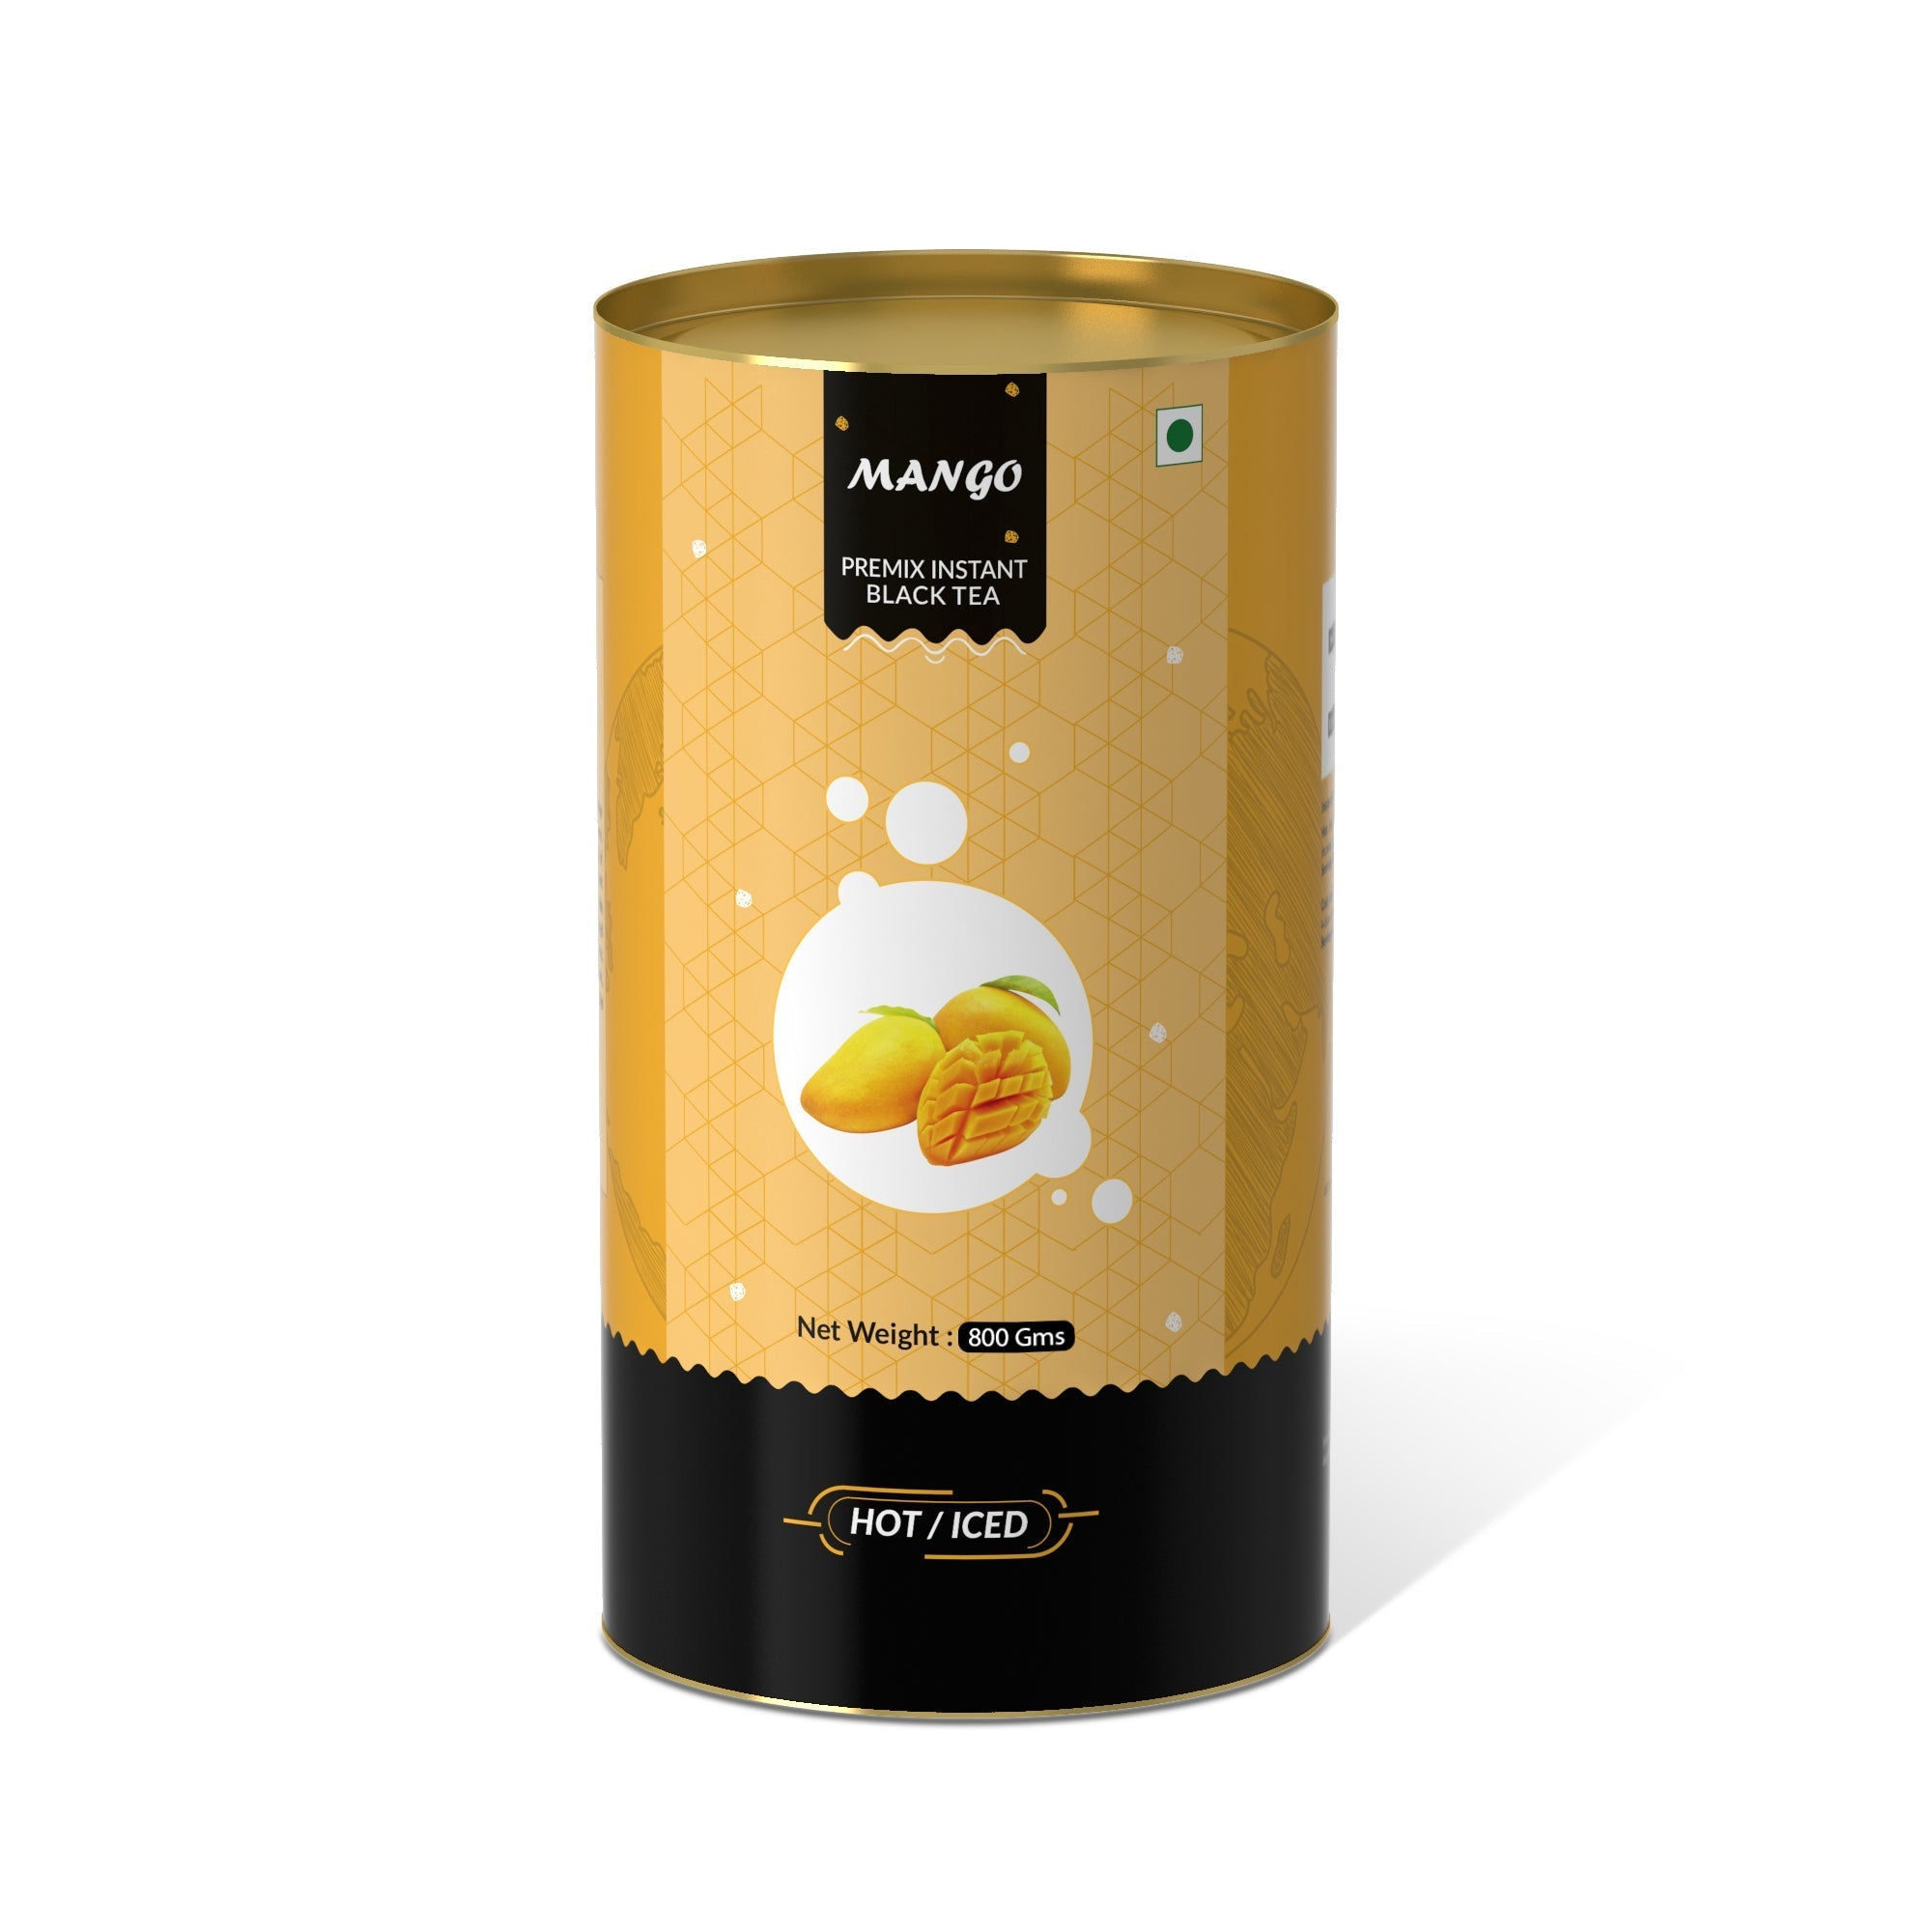 Mango Flavored Instant Black Tea - 400 gms